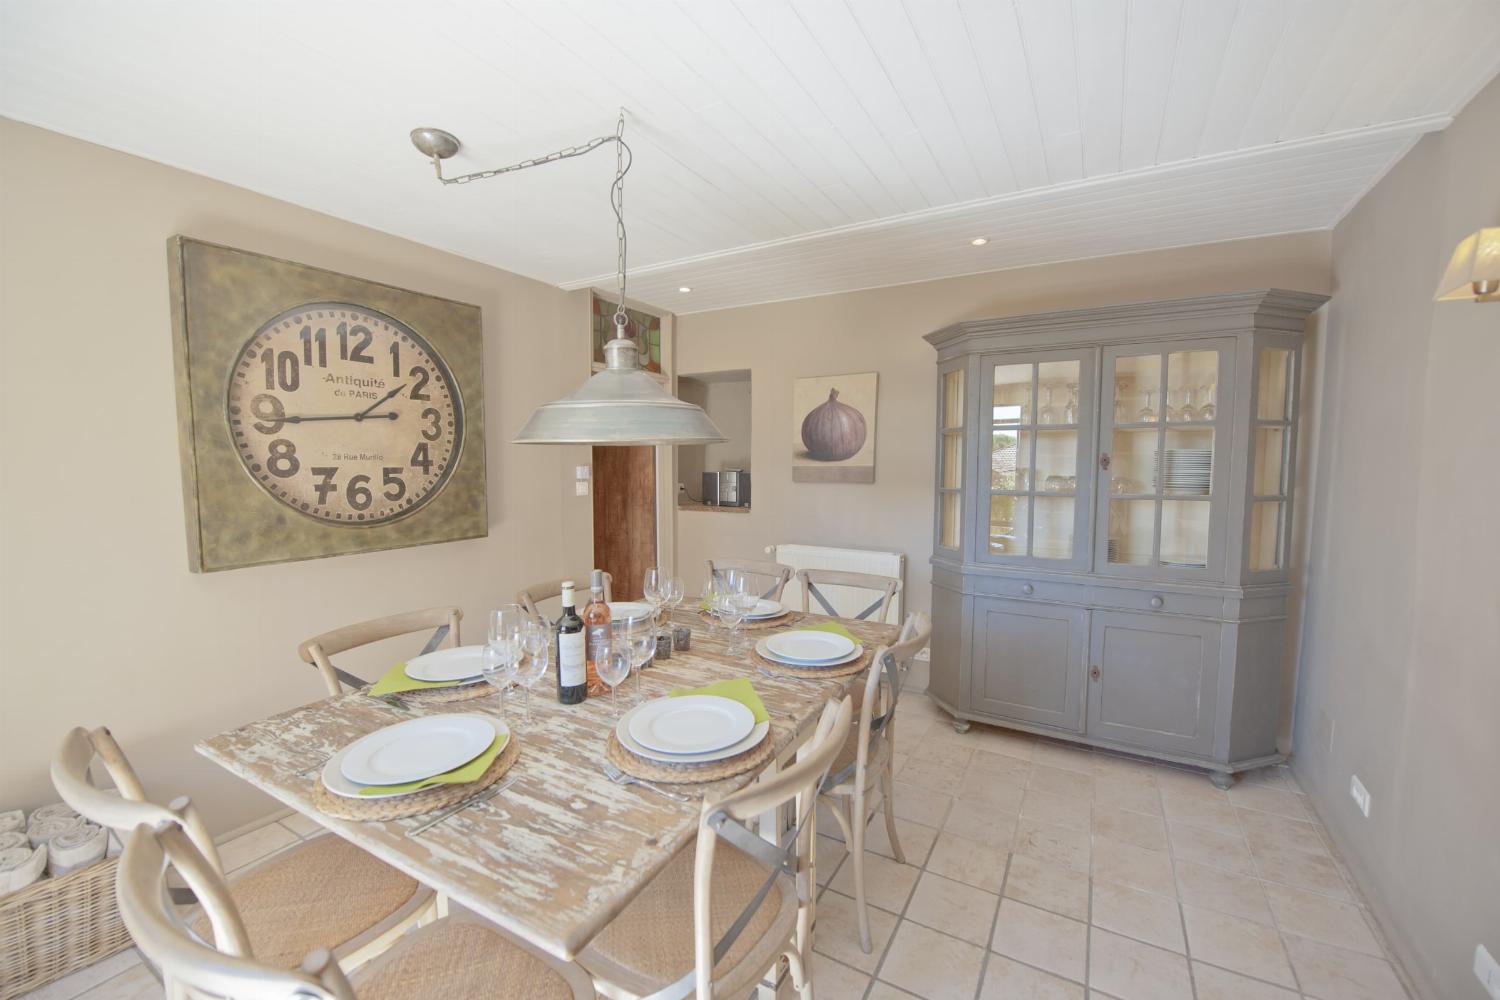 Dining room | Rental home in Dordogne